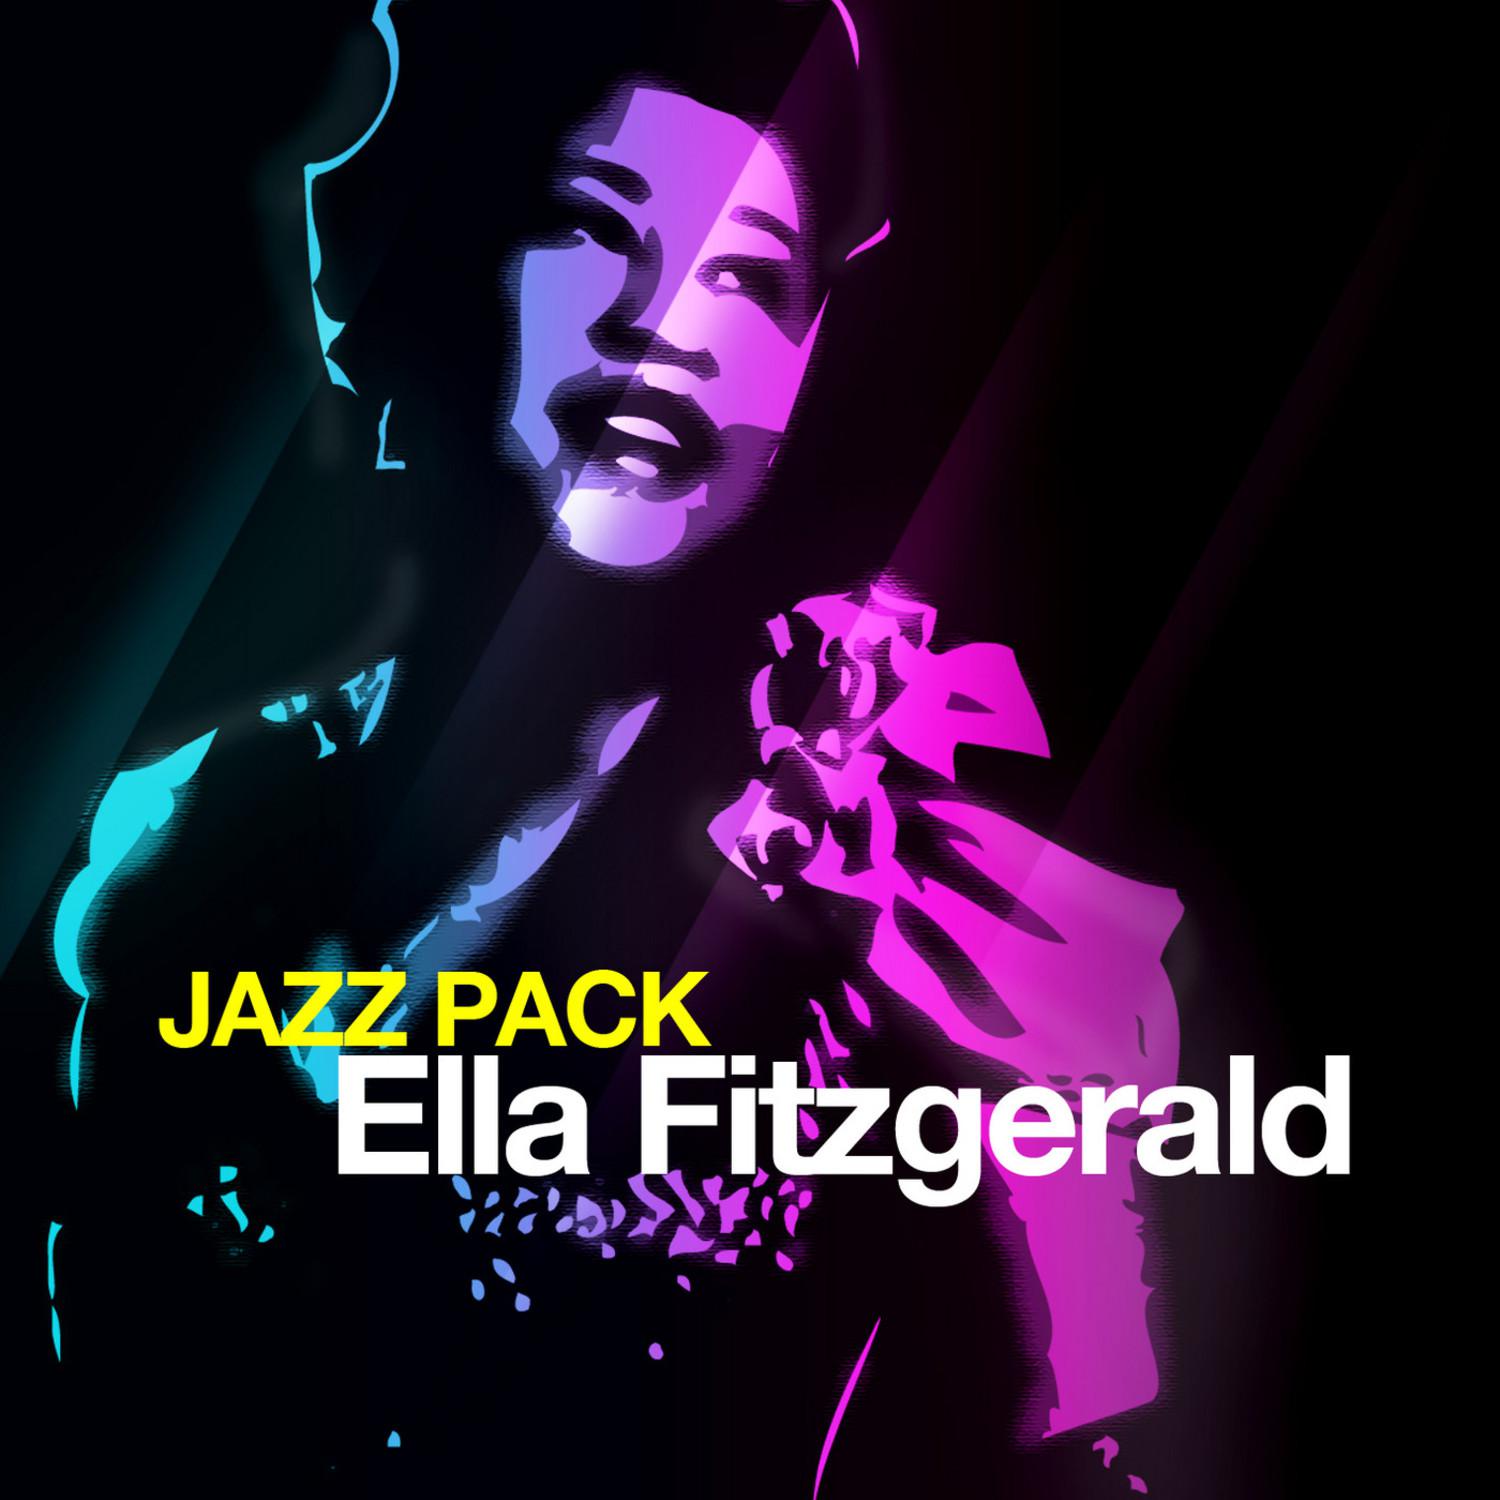 Jazz Pack - Ella Fitzgerald - EP